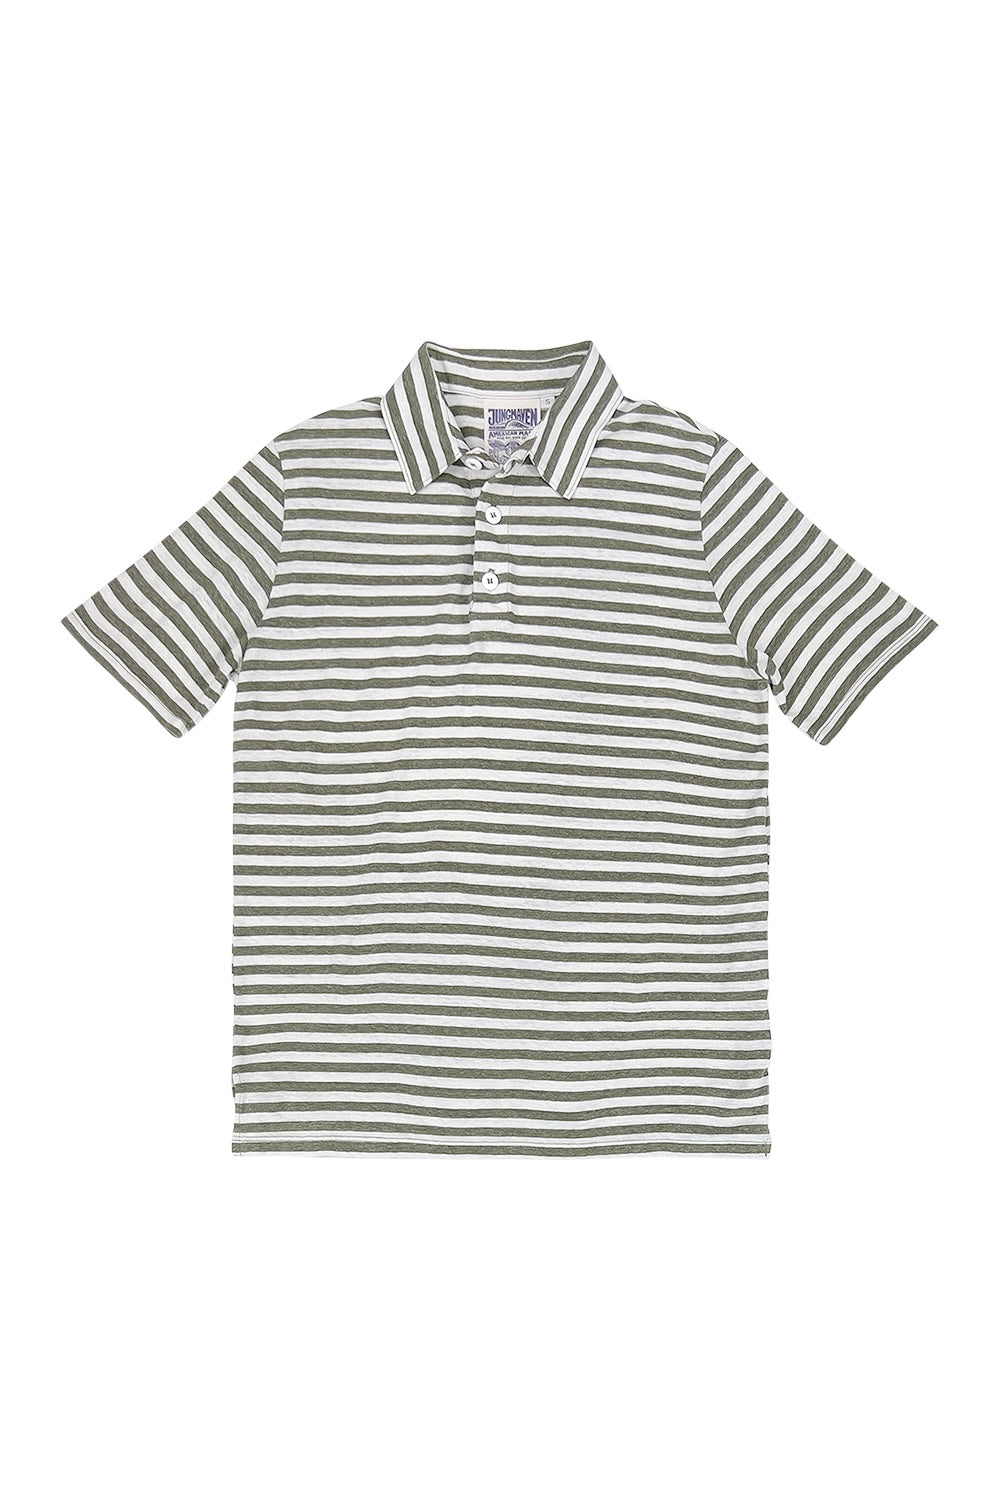 Stripe Camden Polo | Jungmaven Hemp Clothing & Accessories / Color: Olive/White Stripe